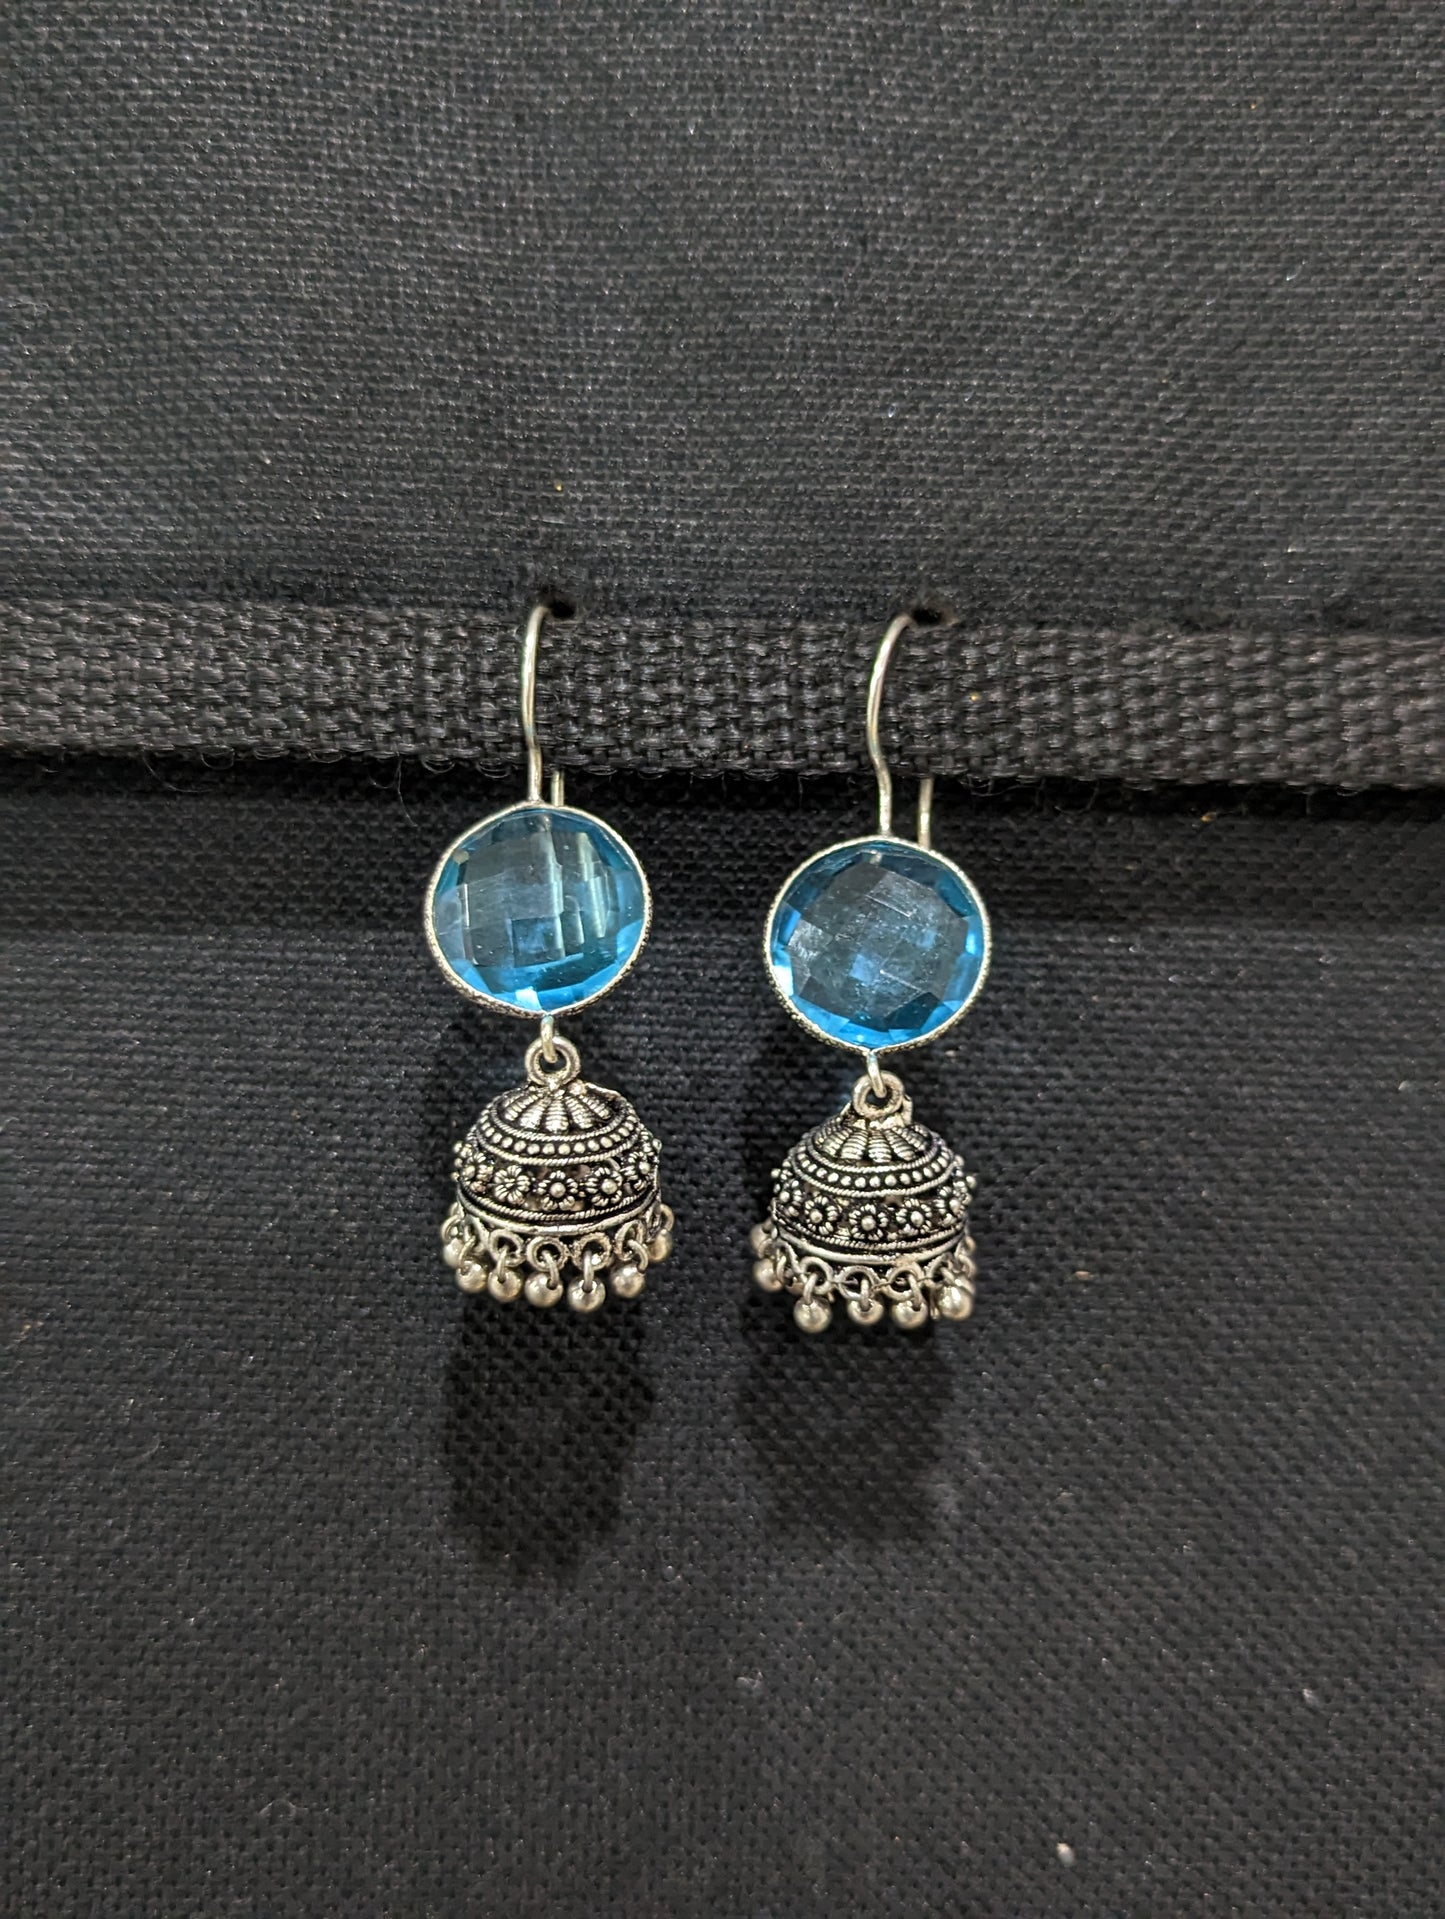 Oxidized silver colorful hook drop jhumka Earrings - 2 designs